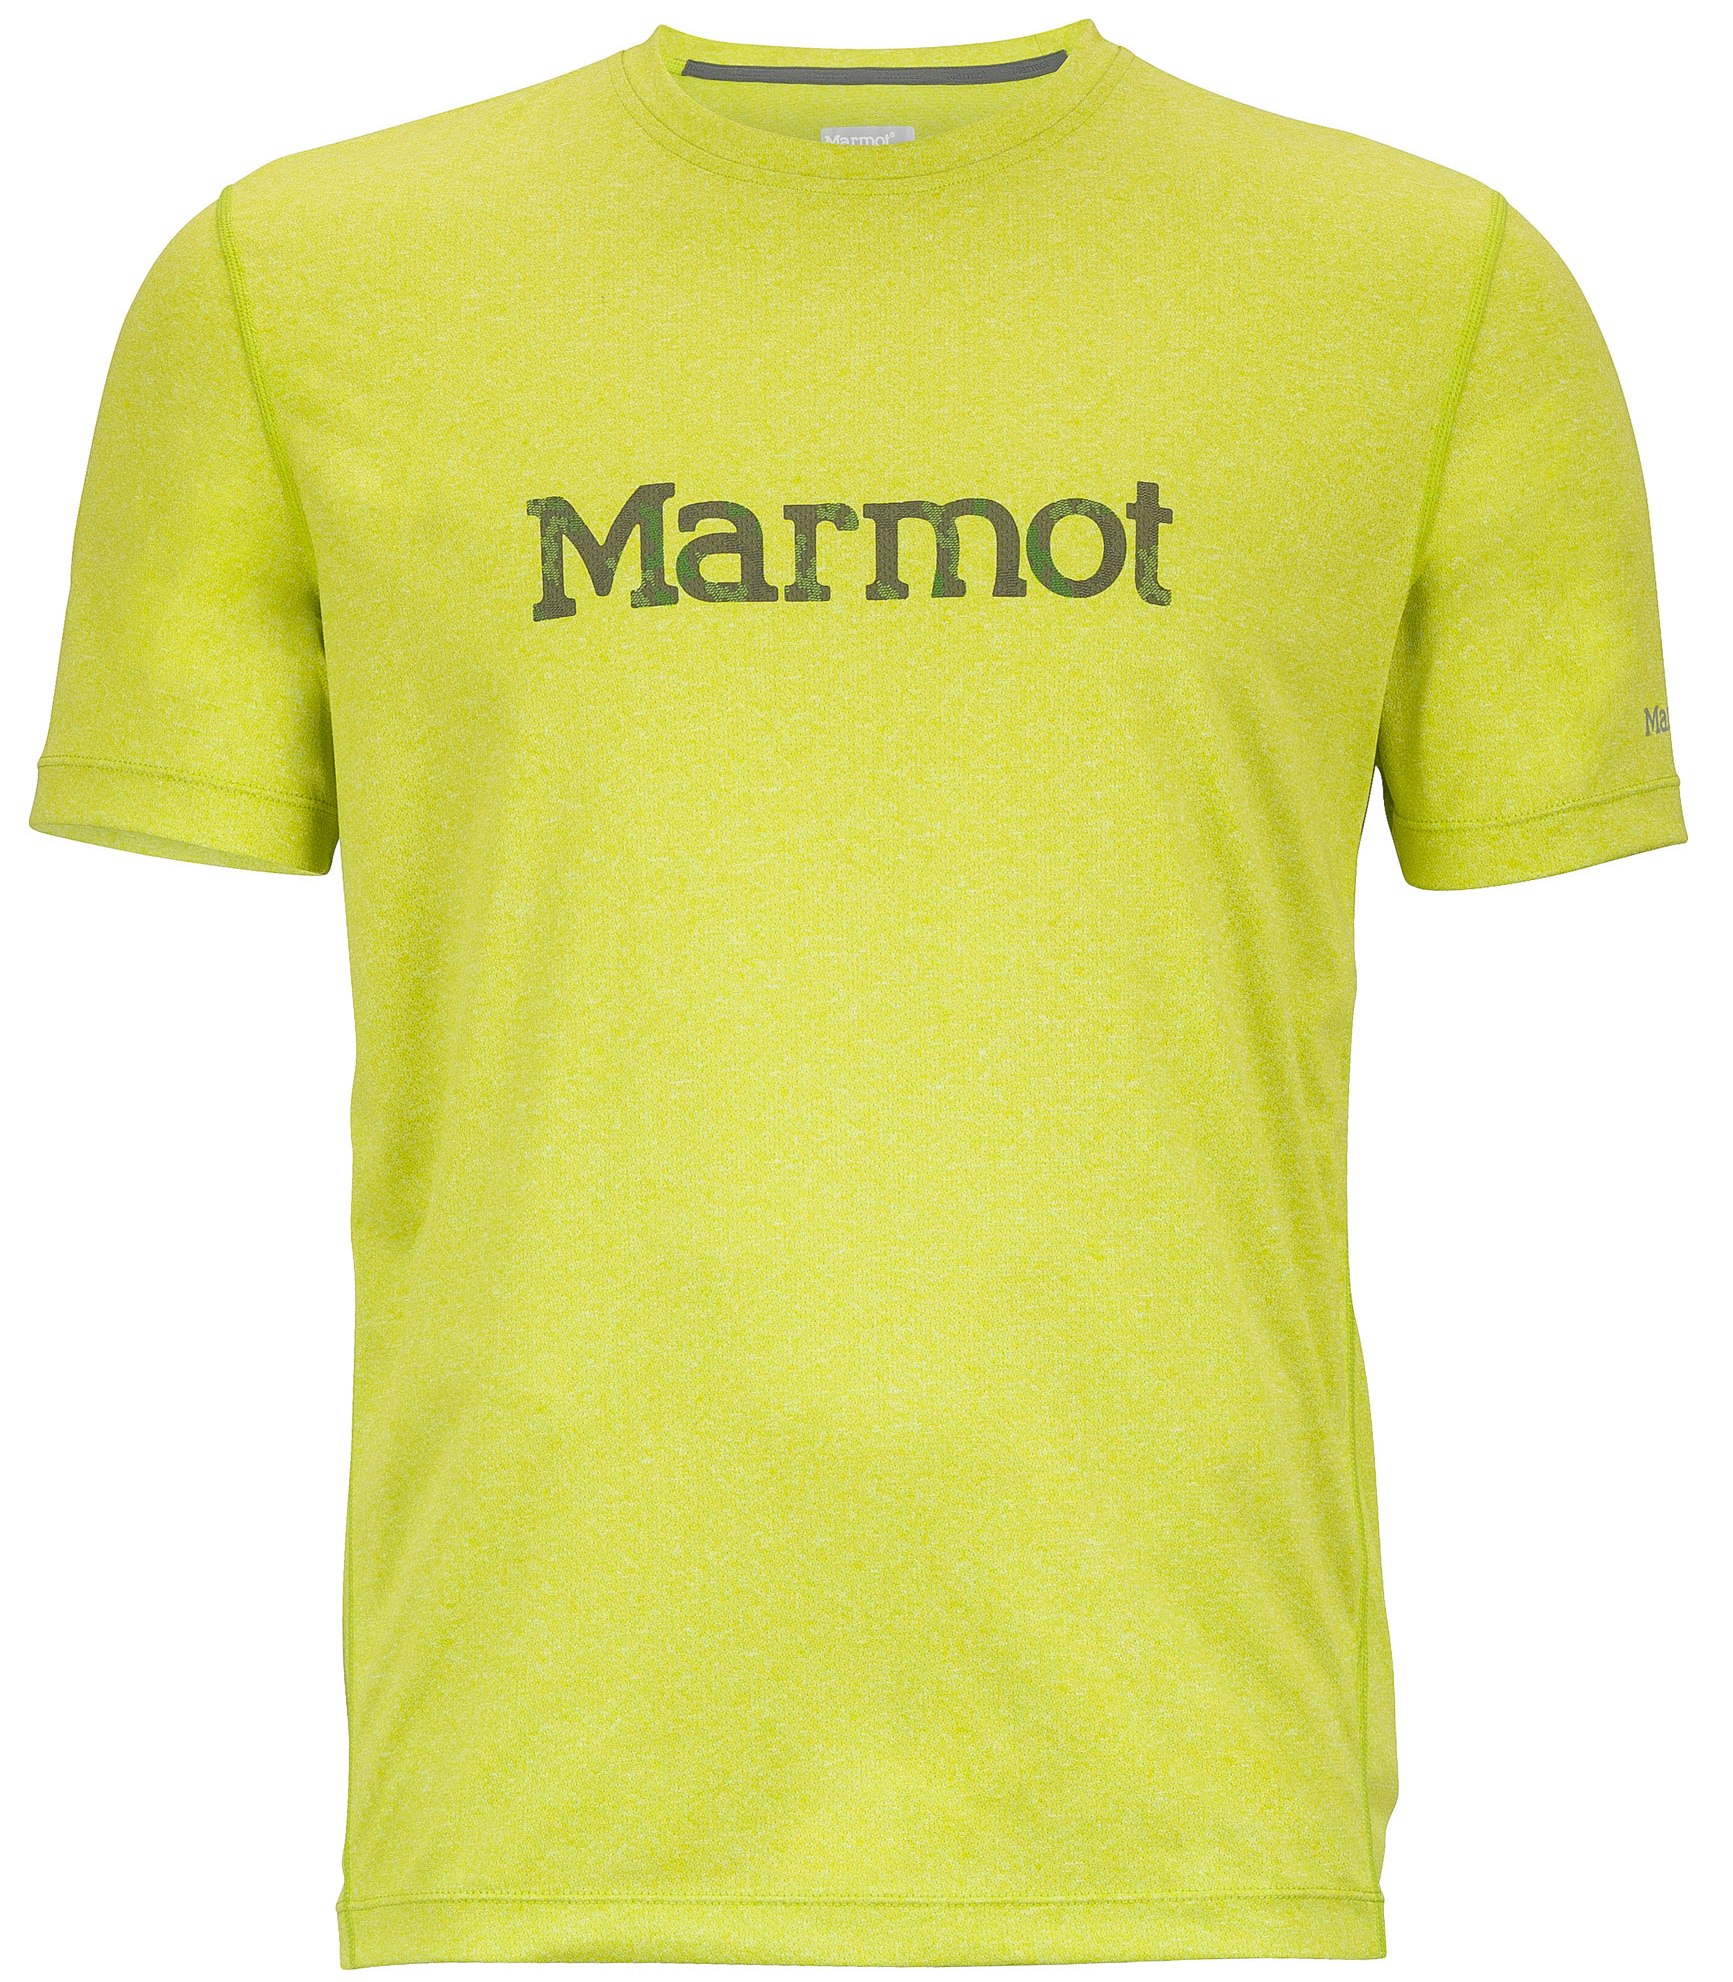 Marmot - Майка мужская для треннинга Impact Tee SS